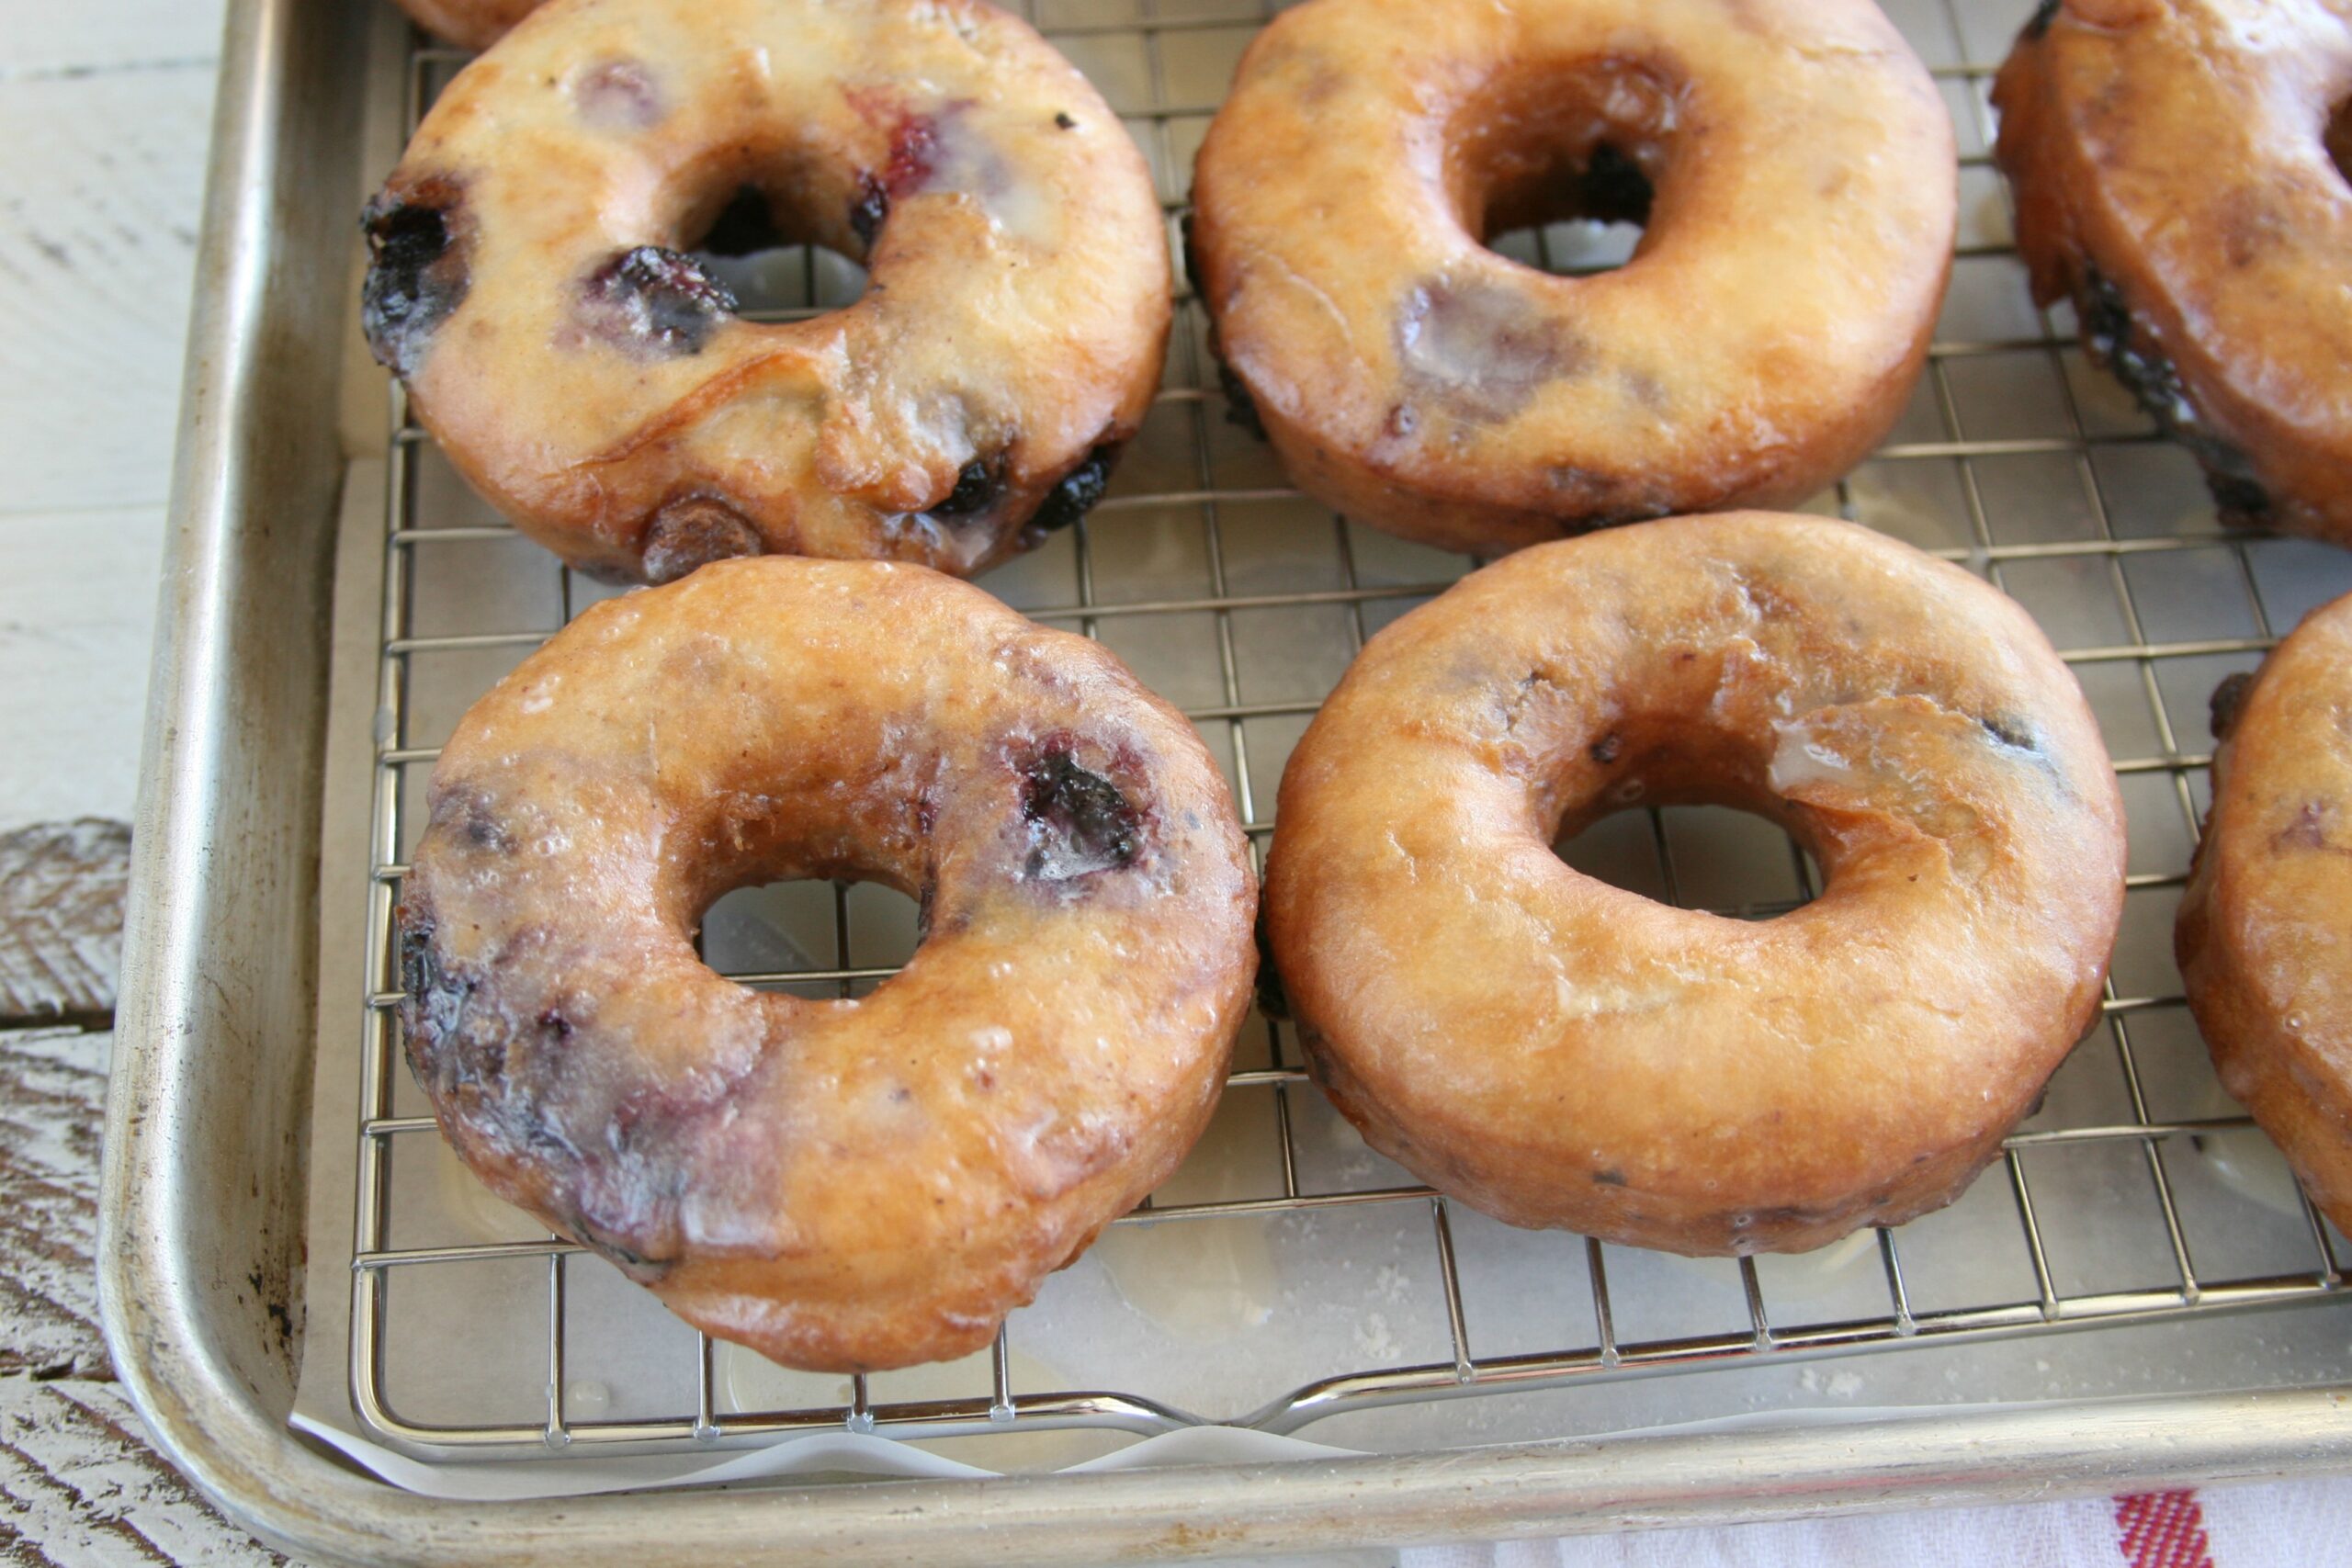 Blueberry cake doughnuts